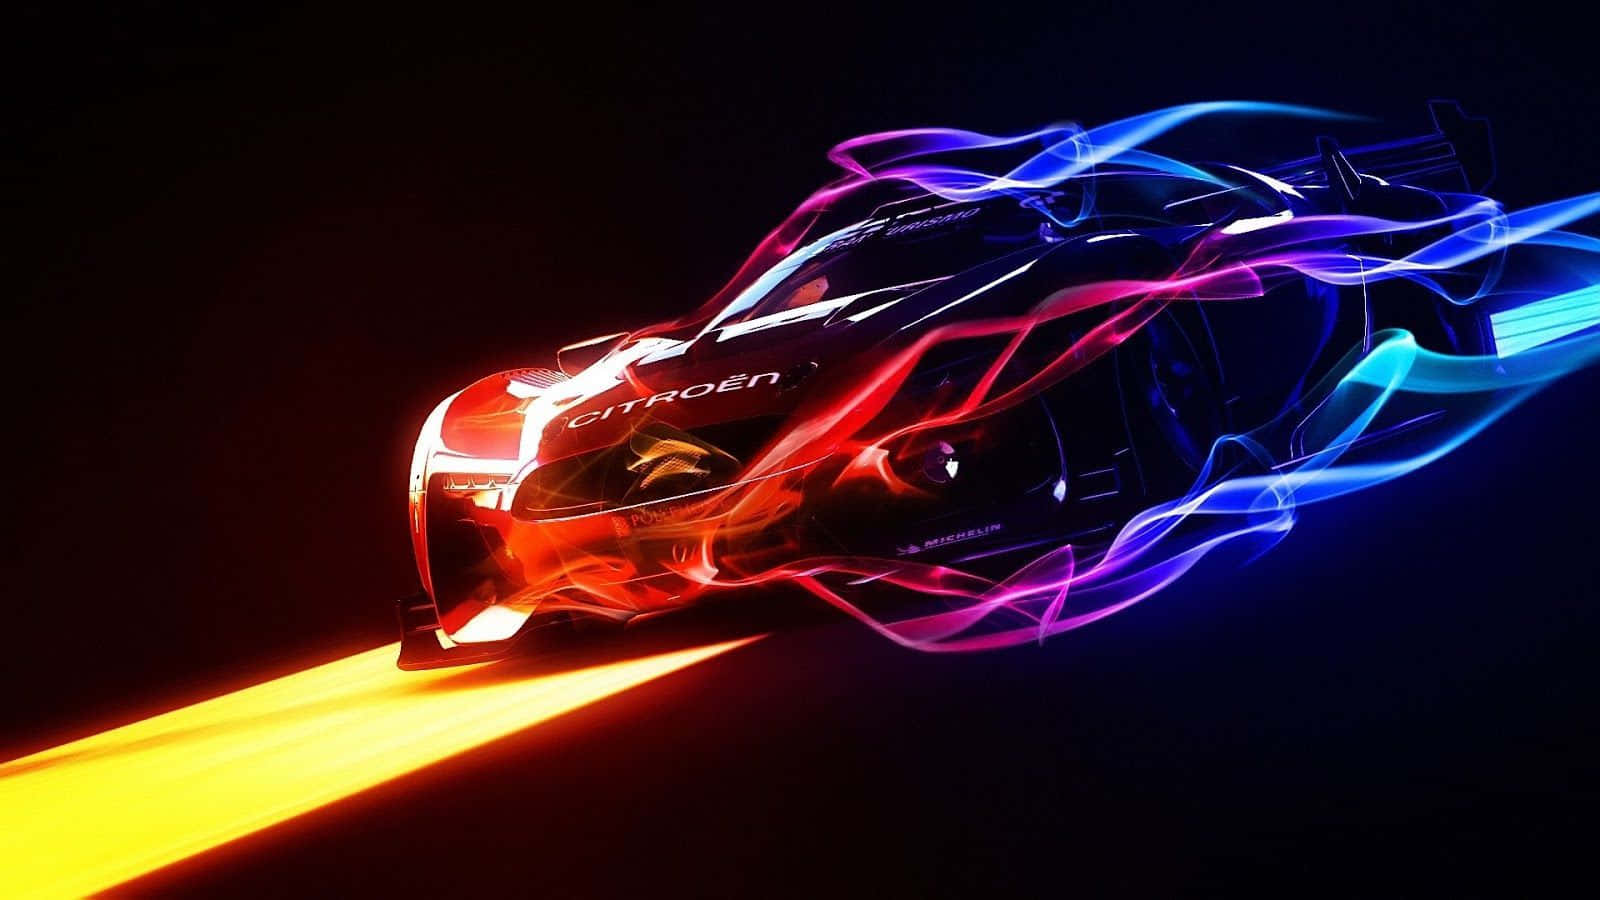 Best Computer Background GT By Citroen Car In Neon Lights